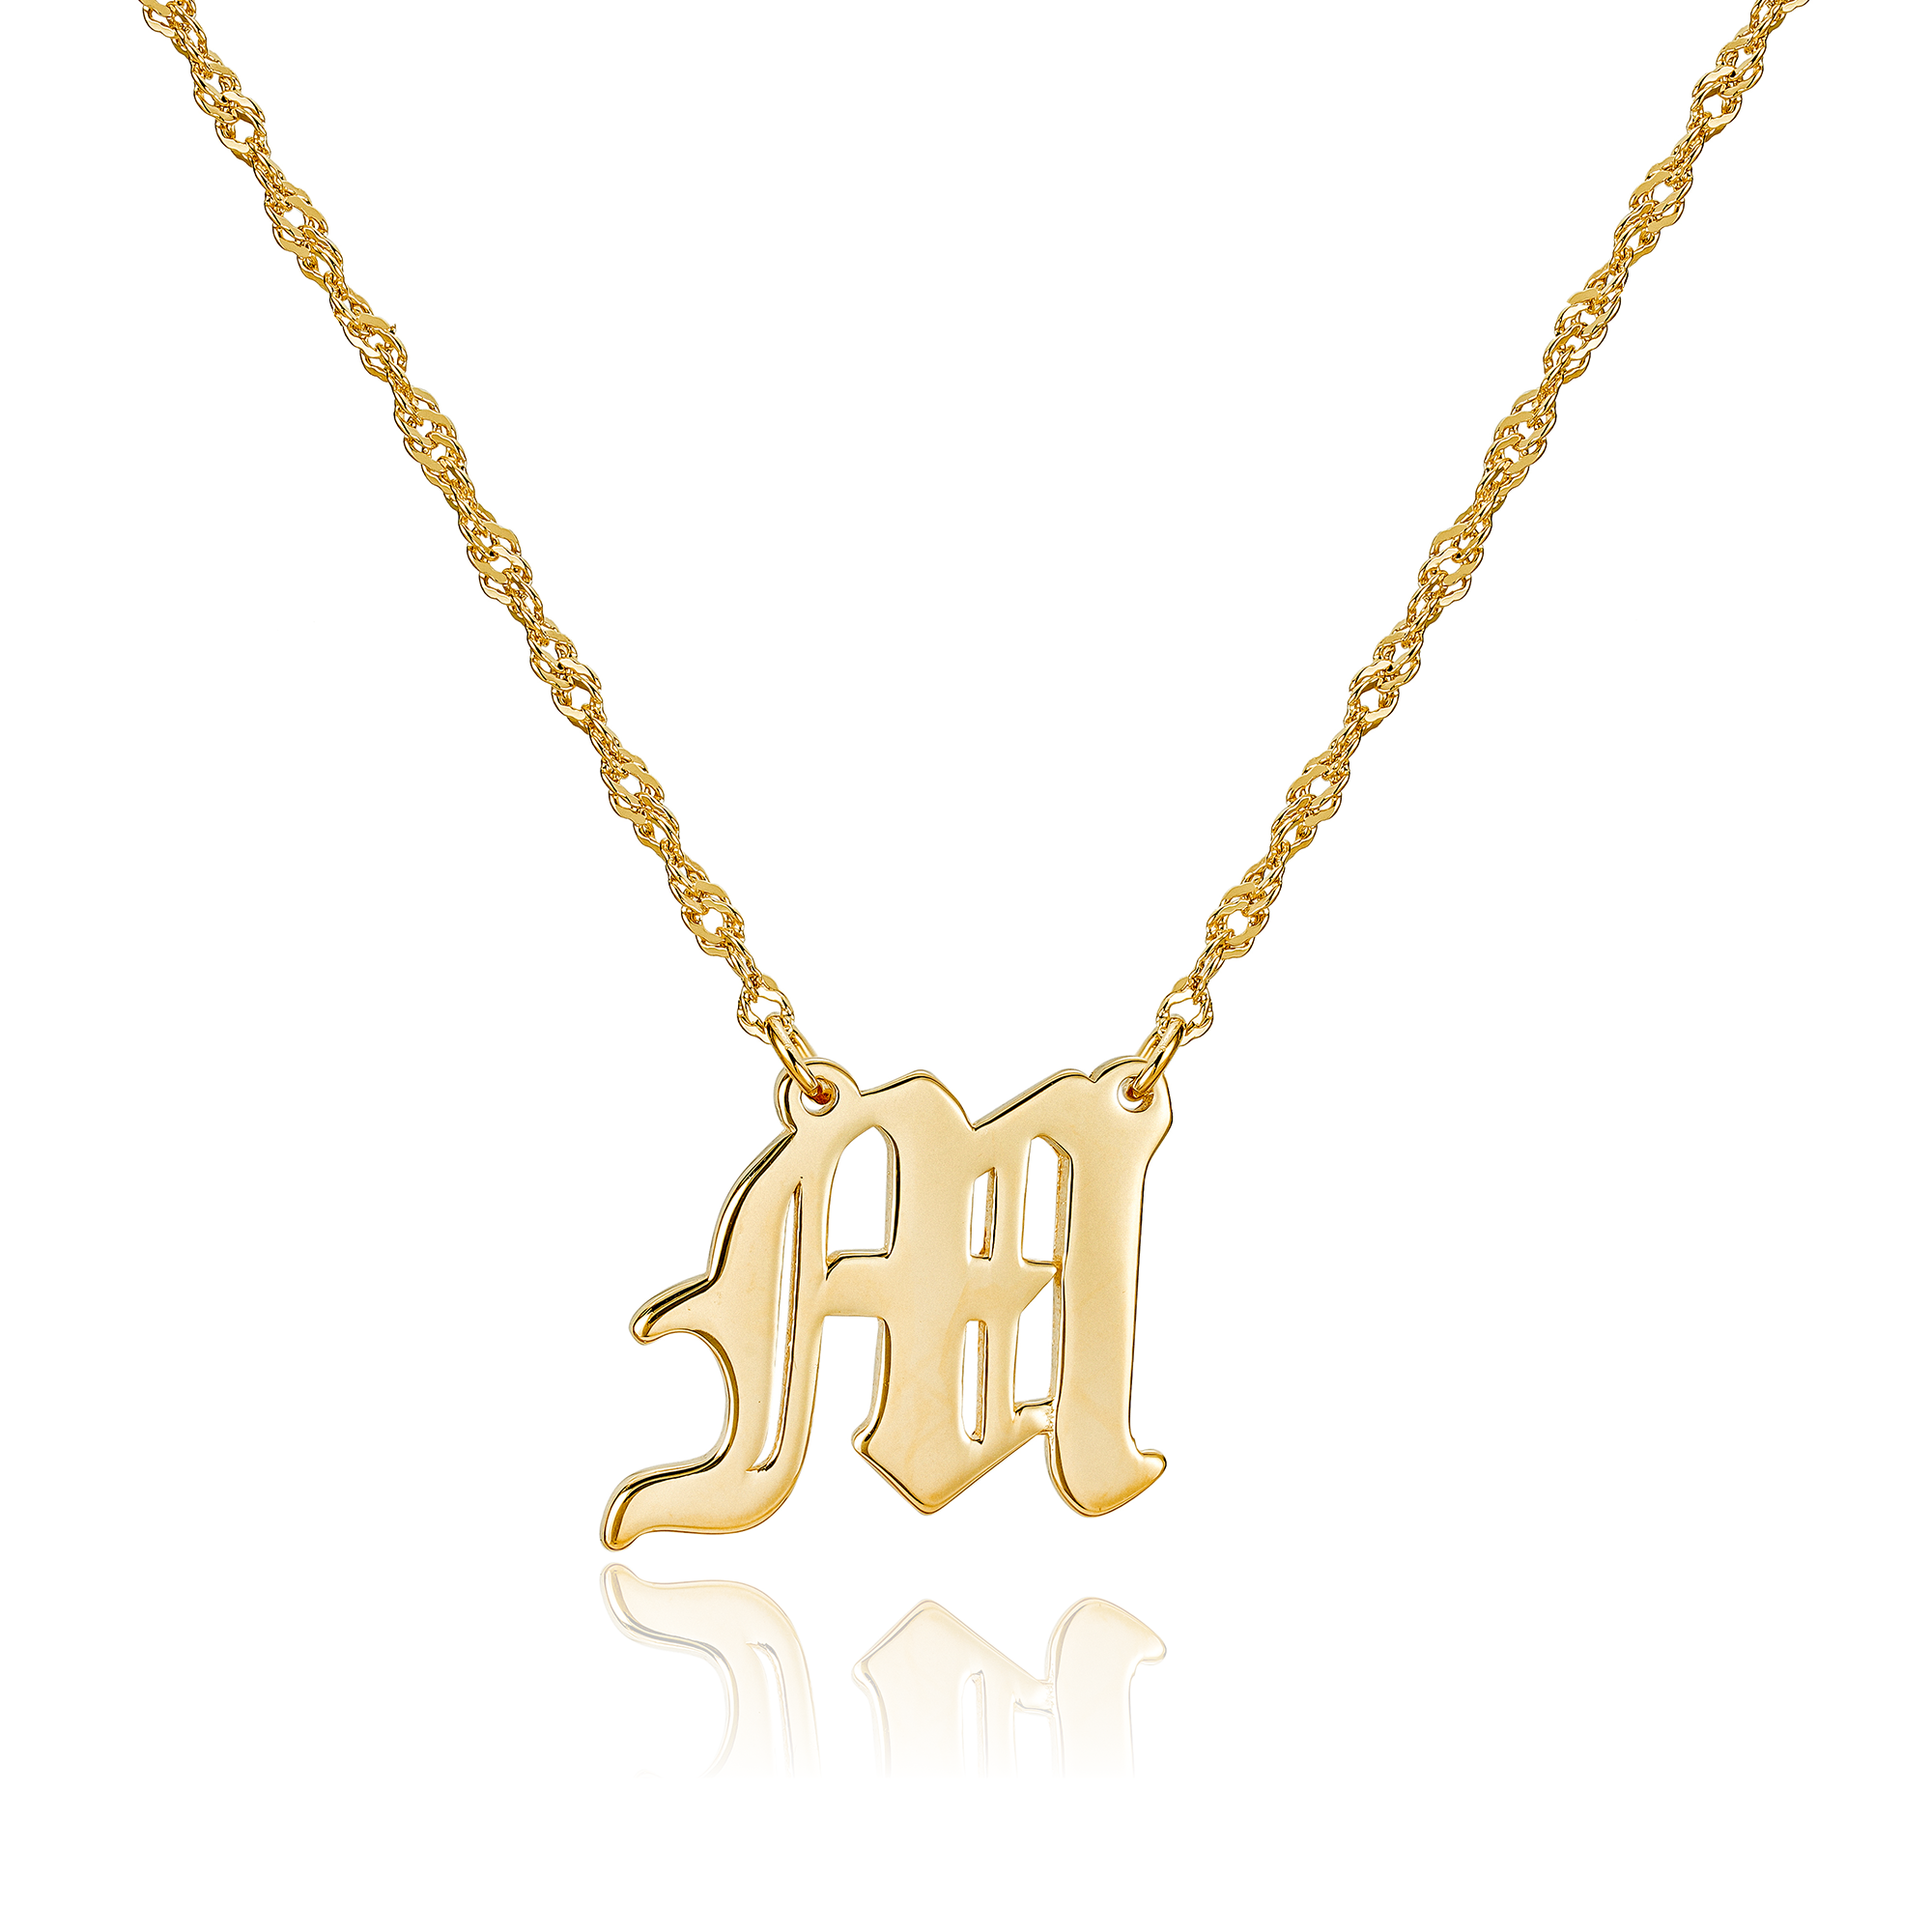 M Letter Alphabet Gold Plated Cnc Cut Pendant With King Crown Design -  Style A442 at Rs 500.00 | Fancy Alphabet Pendant, एल्फाबेट पेंडेंट,  अल्फाबेट पेंडेंट - Soni Fashion, Rajkot | ID: 25973322355